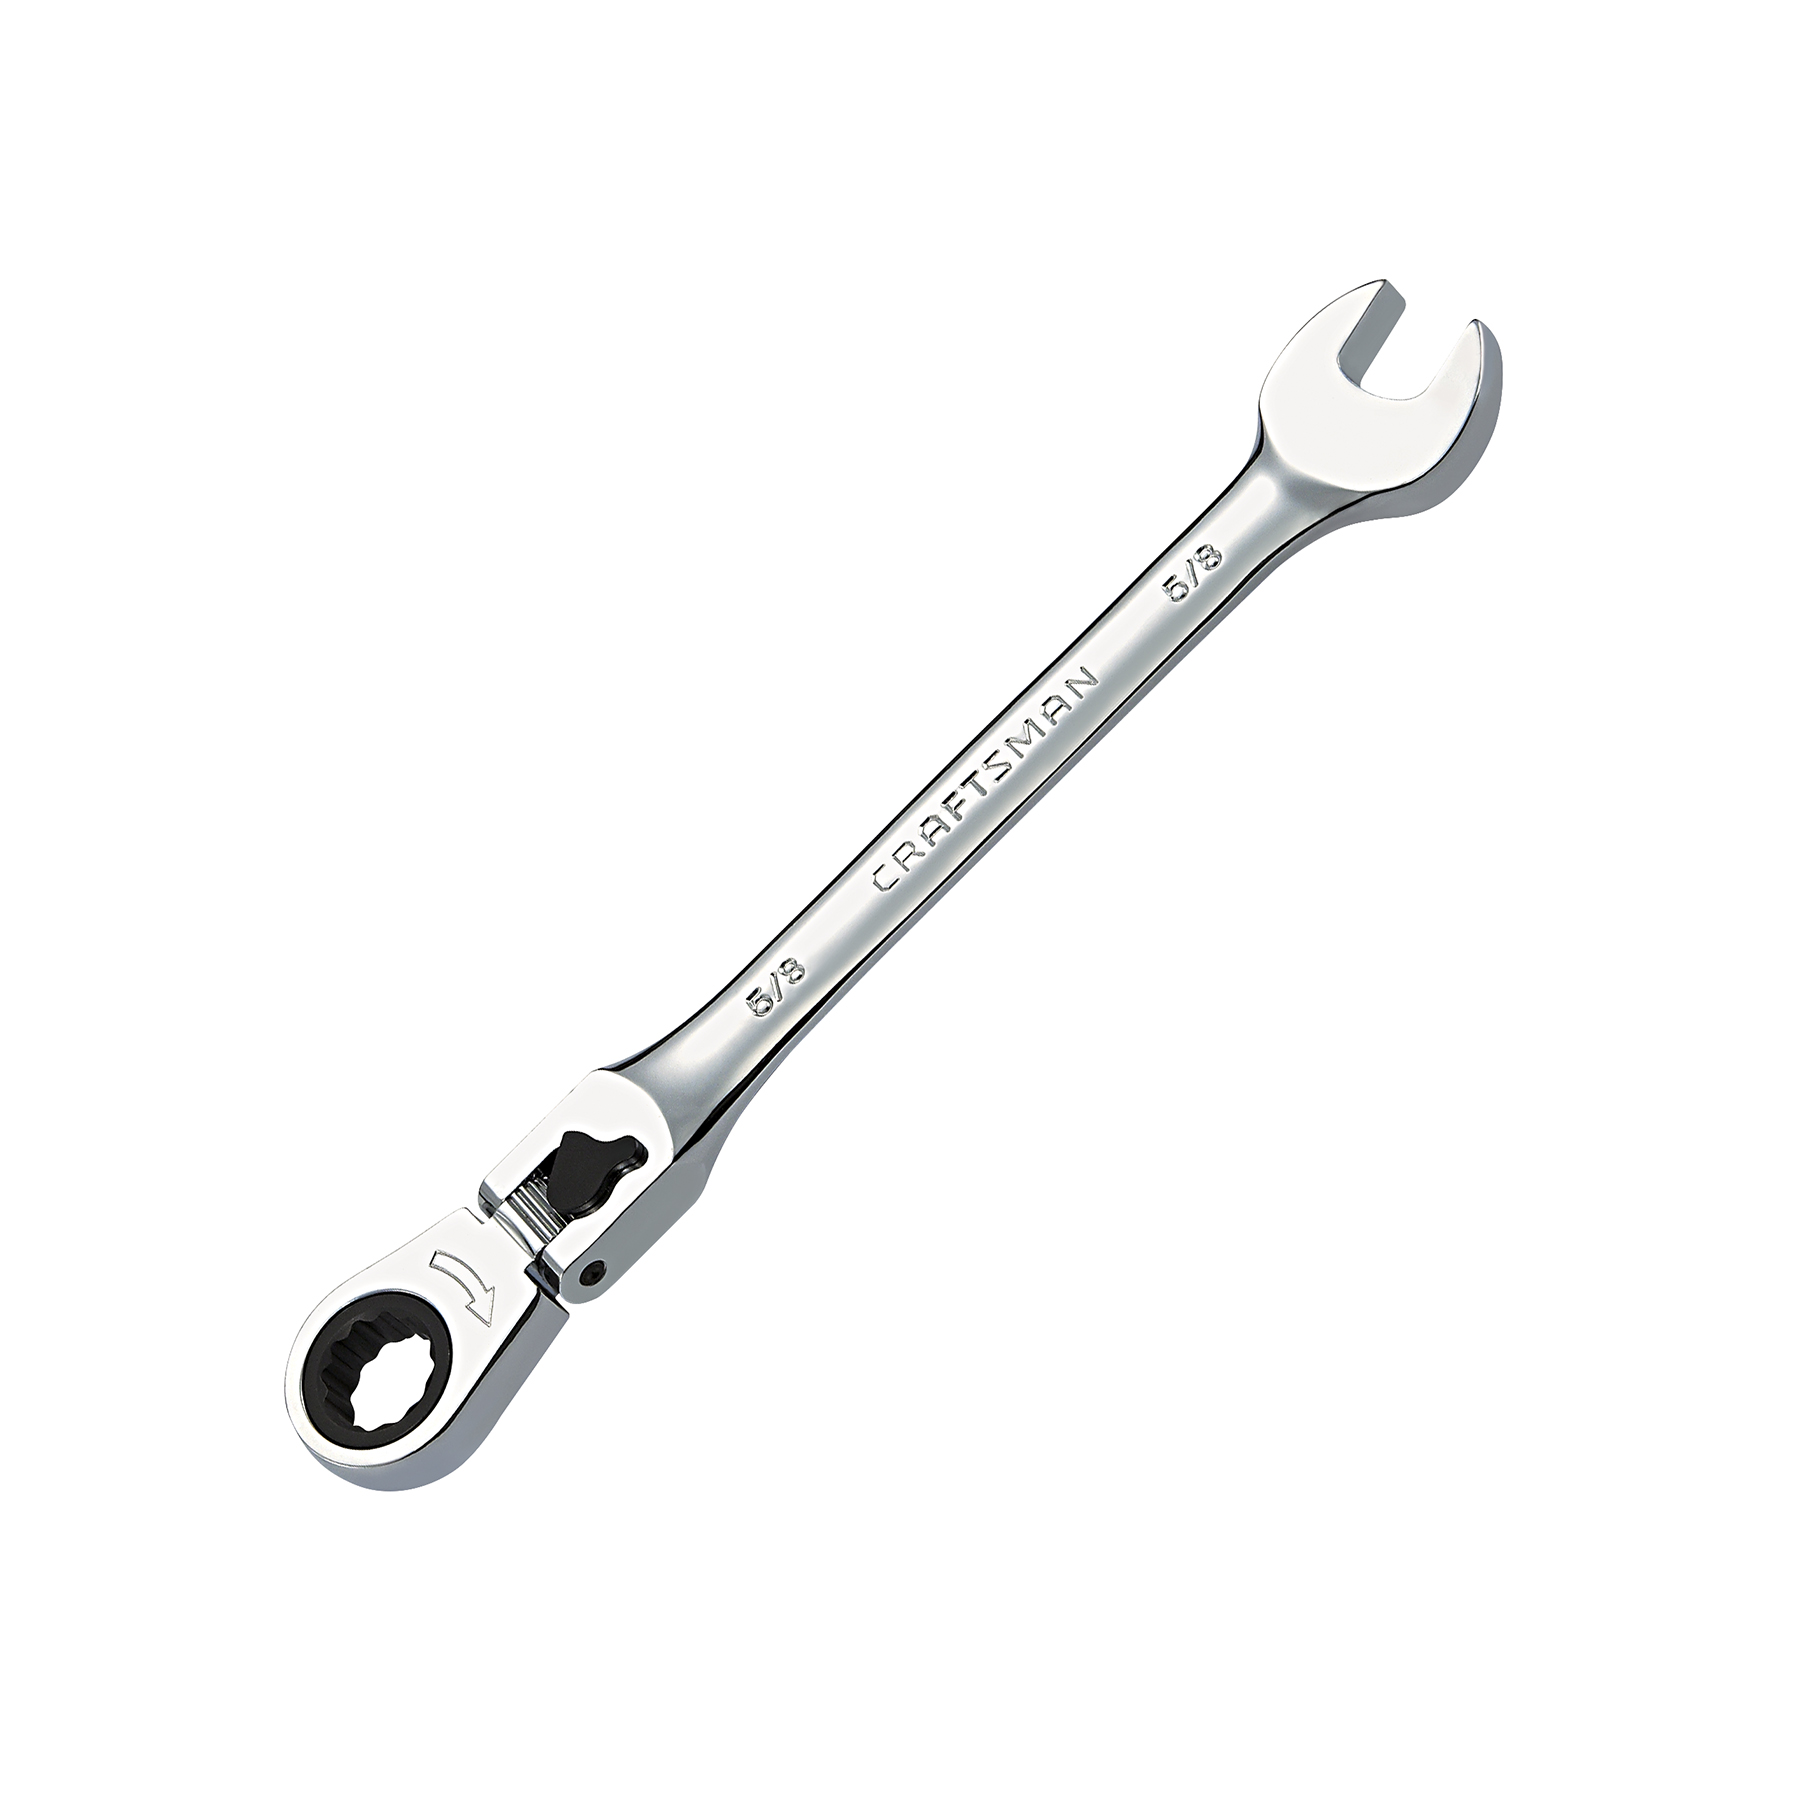 Craftsman 5/8" Locking Flex Ratcheting Combination Wrench